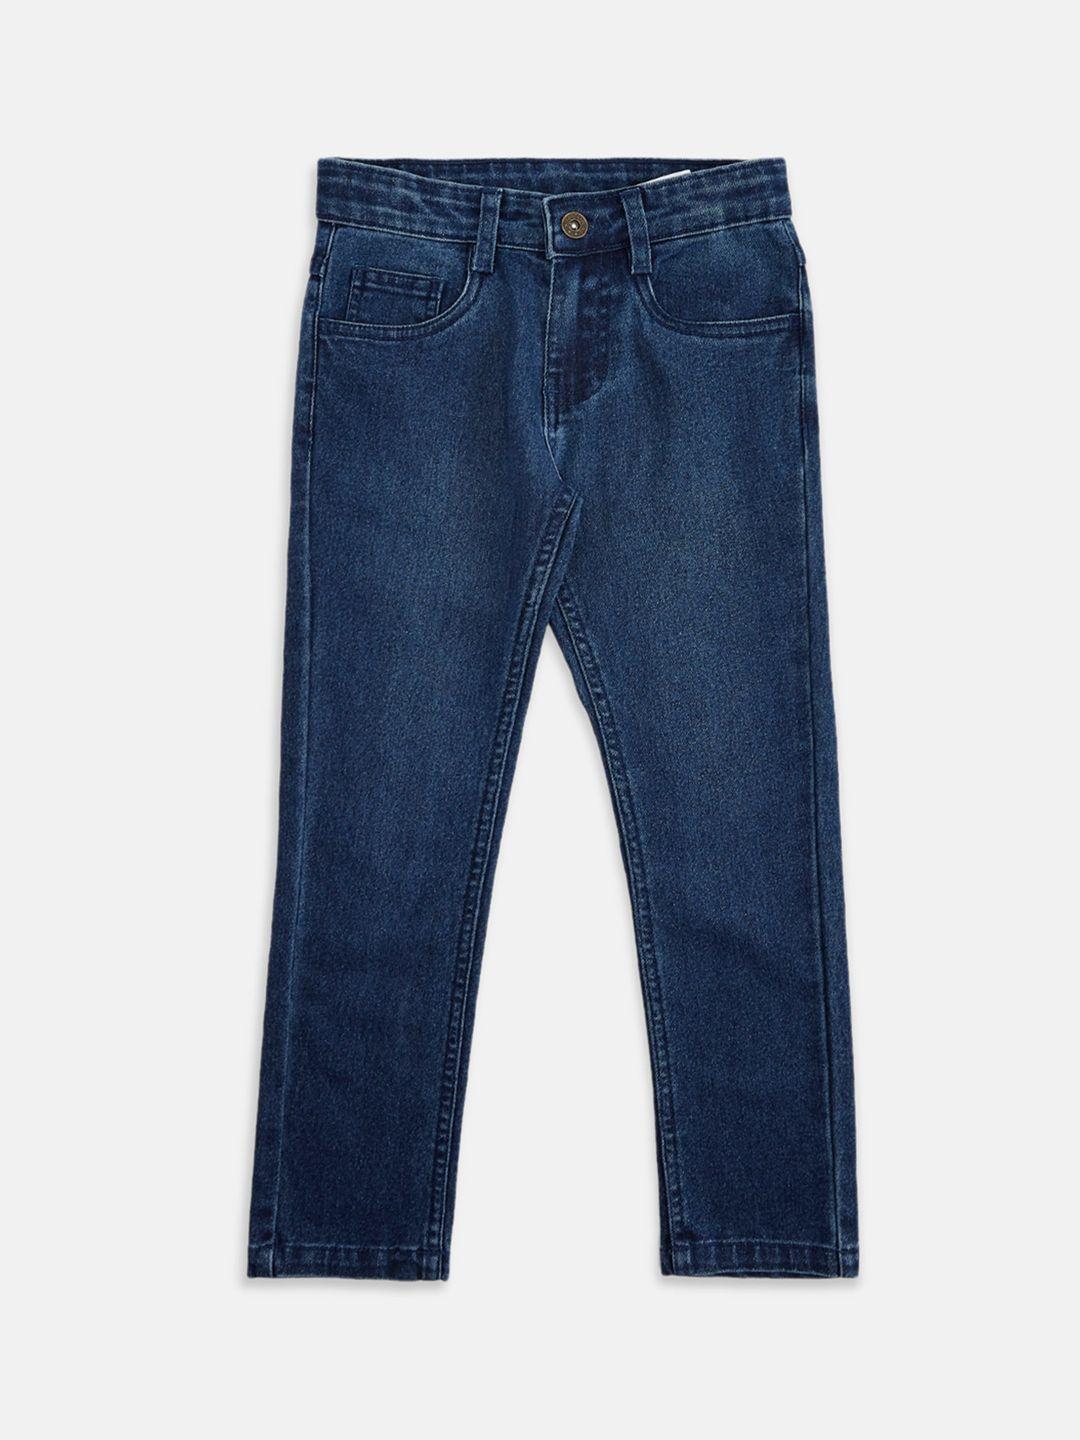 pantaloons-junior-boys-blue-light-fade-jeans